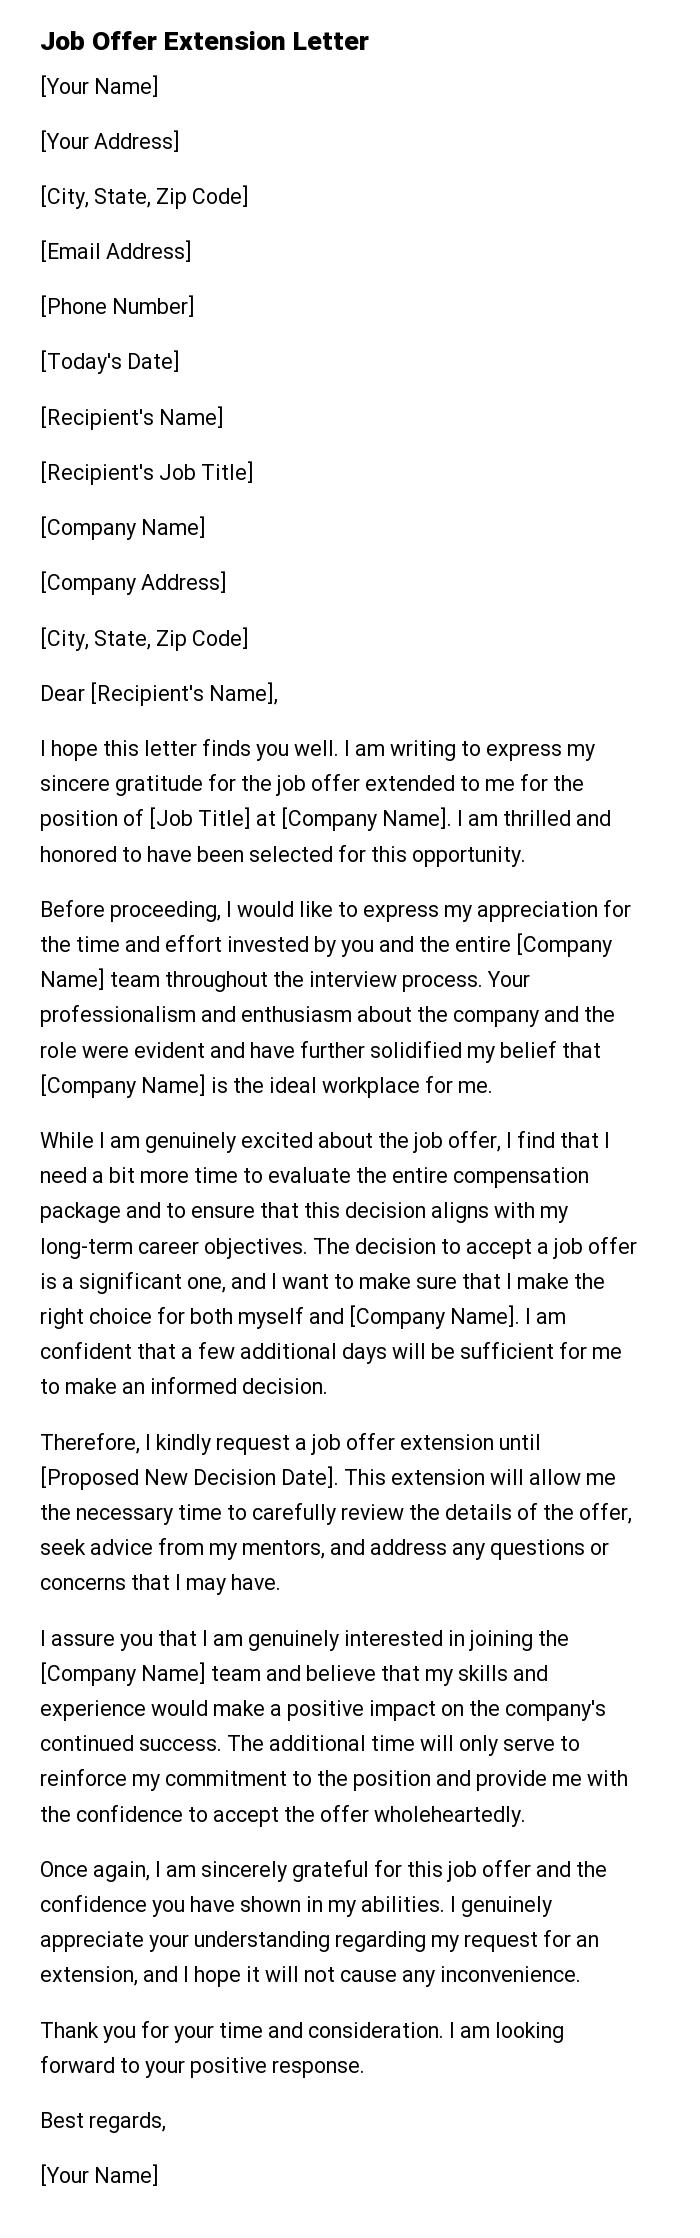 Job Offer Extension Letter